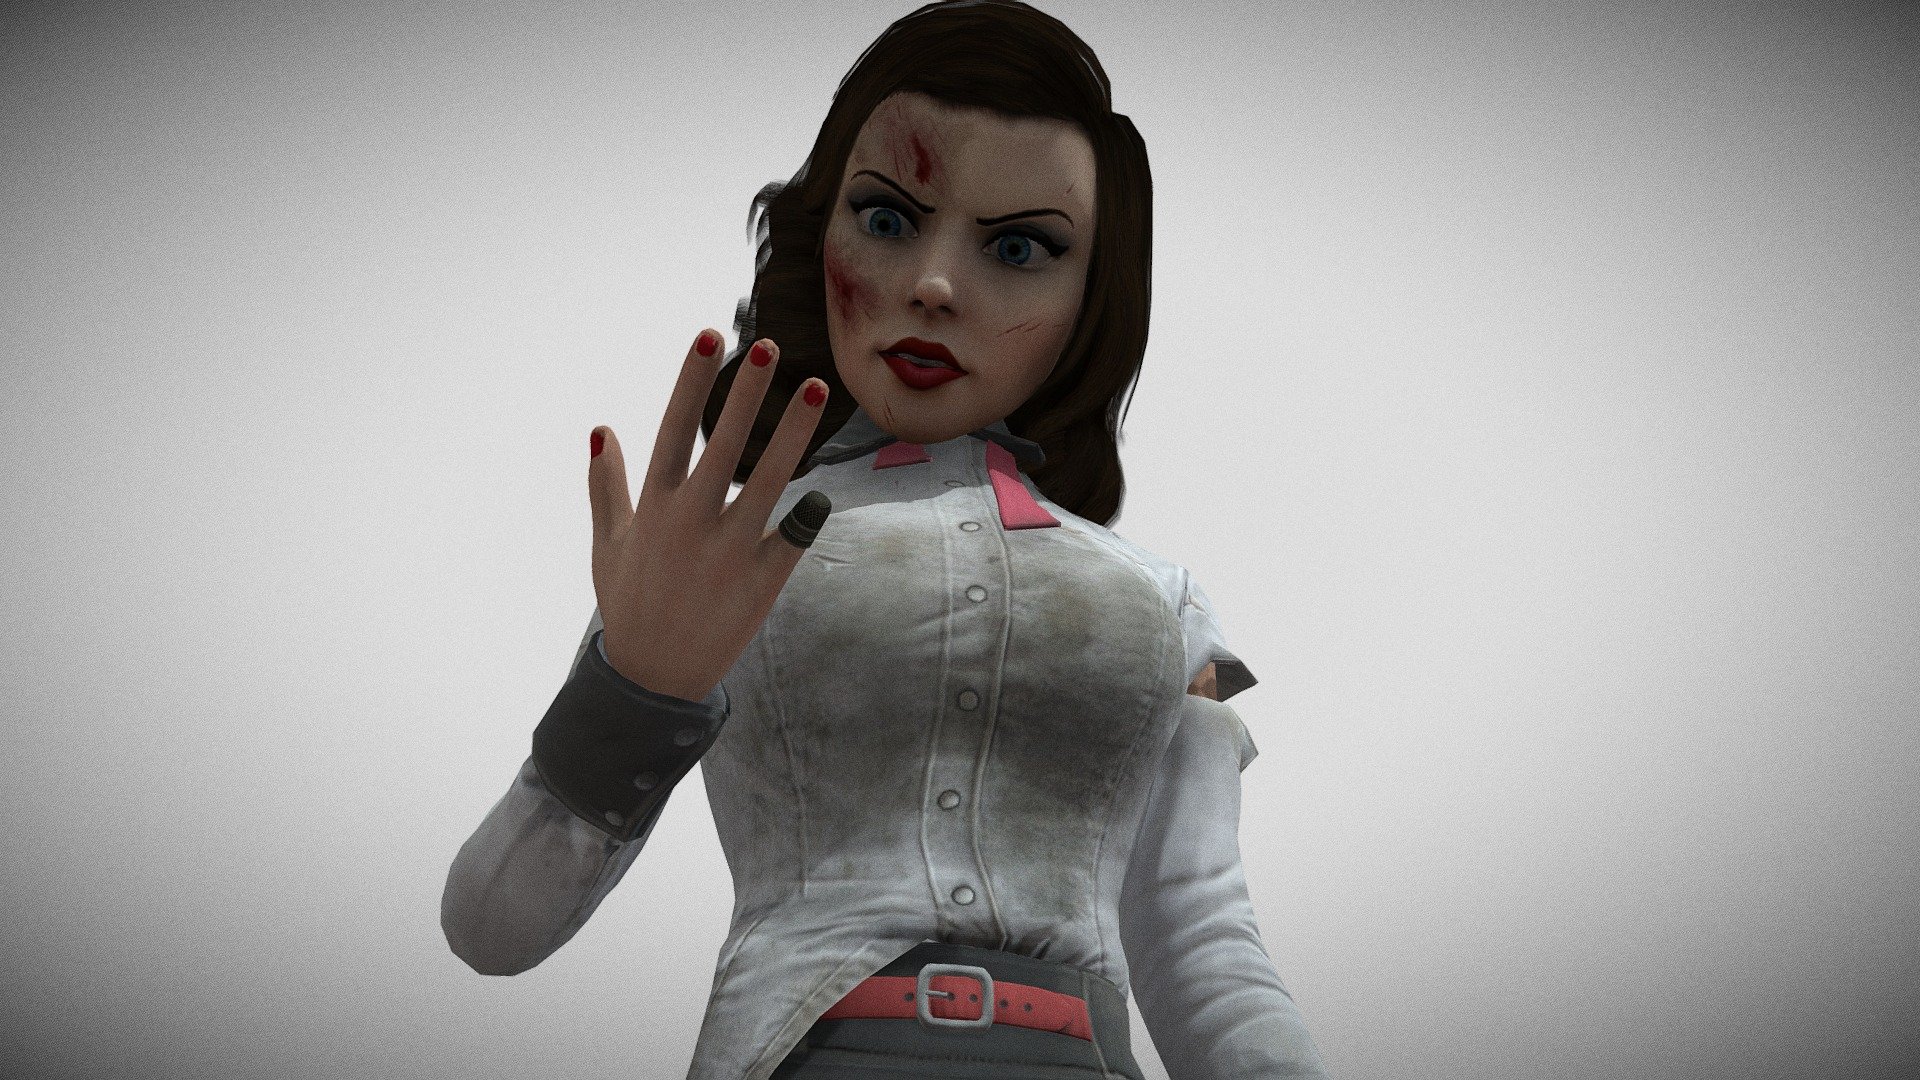 Elizabeth from Bioshock Infinite